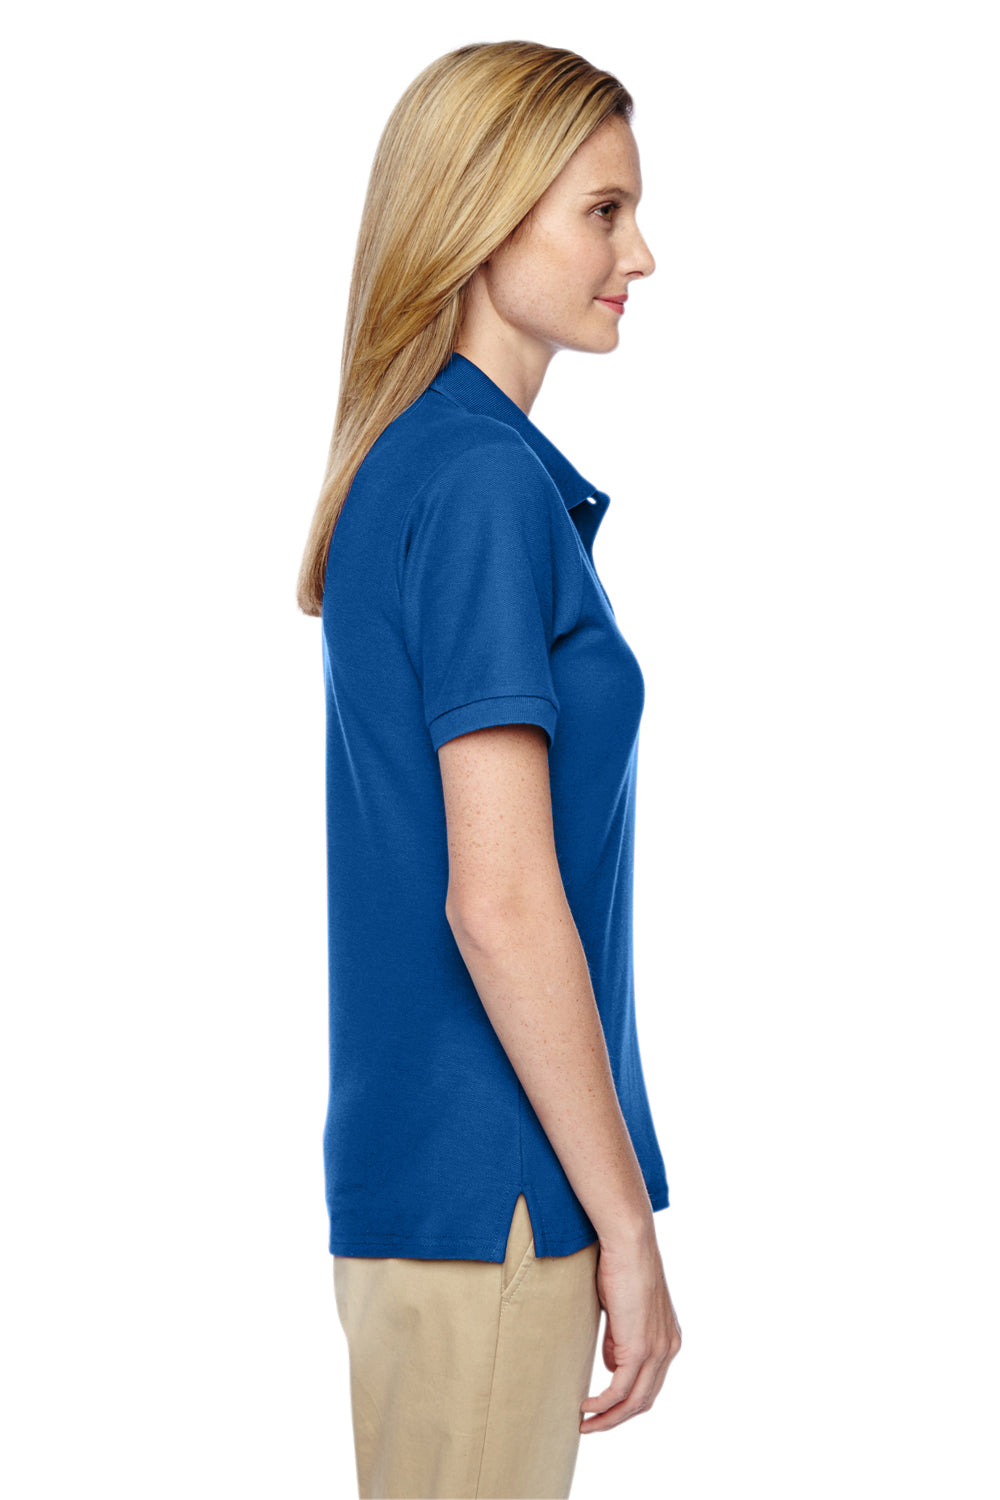 Jerzees 537WR Womens Easy Care Moisture Wicking Short Sleeve Polo Shirt Royal Blue Side